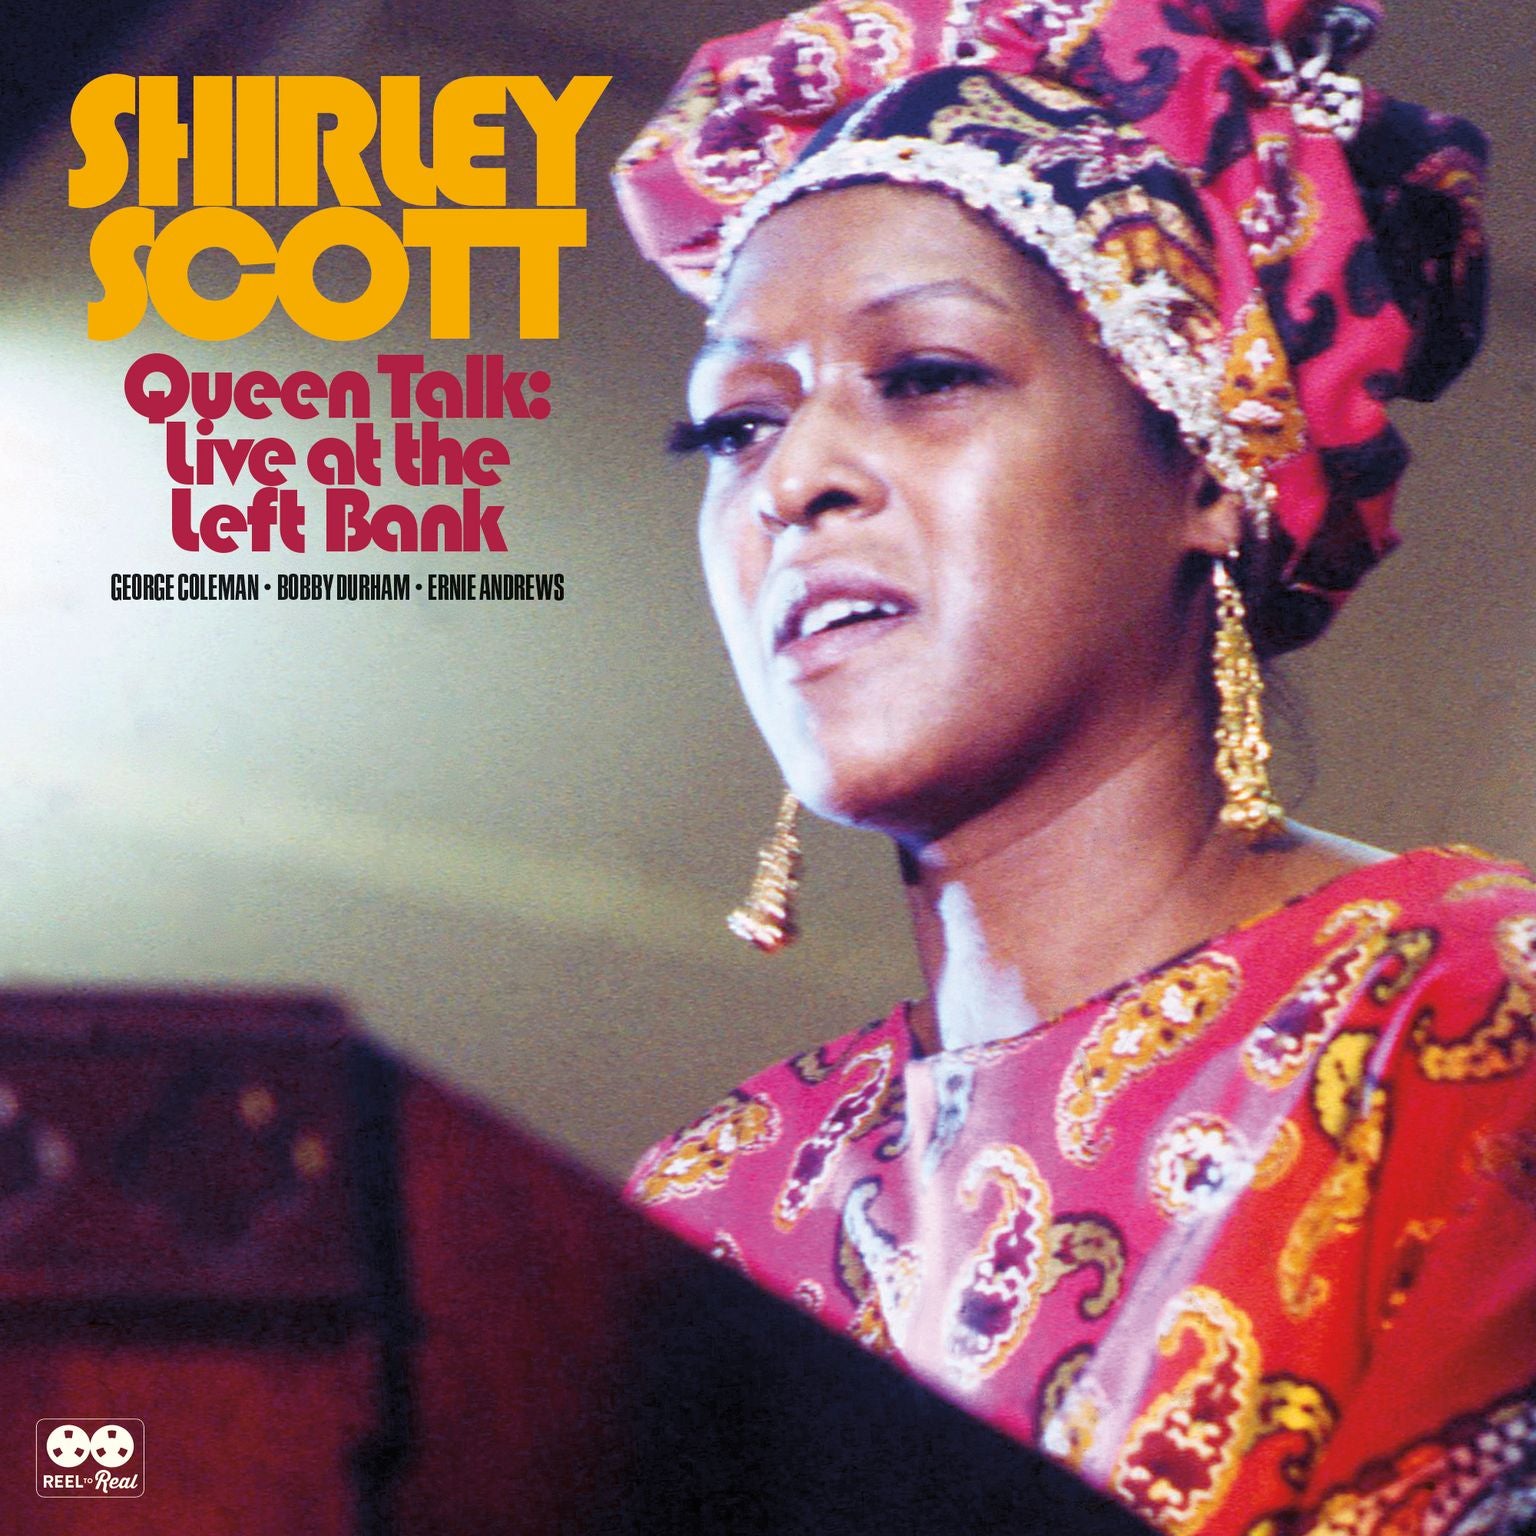 SHIRLEY SCOTT - Queen Talk: Live at the Left Bank - 2LP - Vinyl [RSD23]